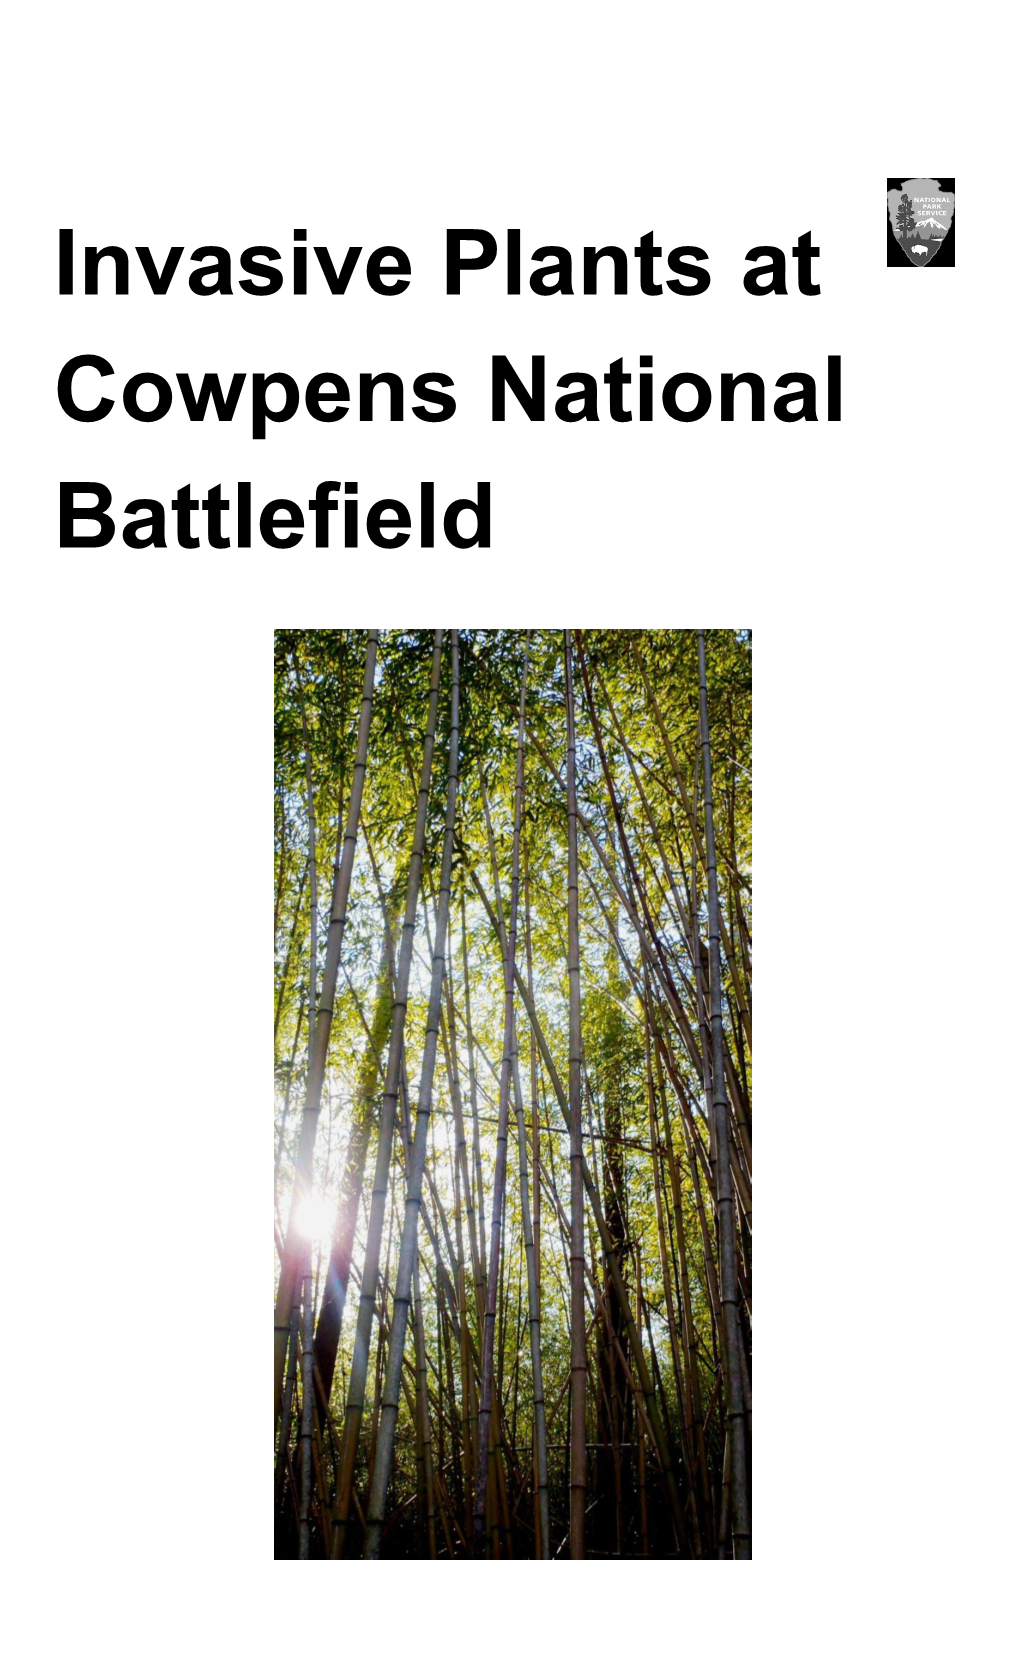 Invasive Plants at Cowpens National Battlefield